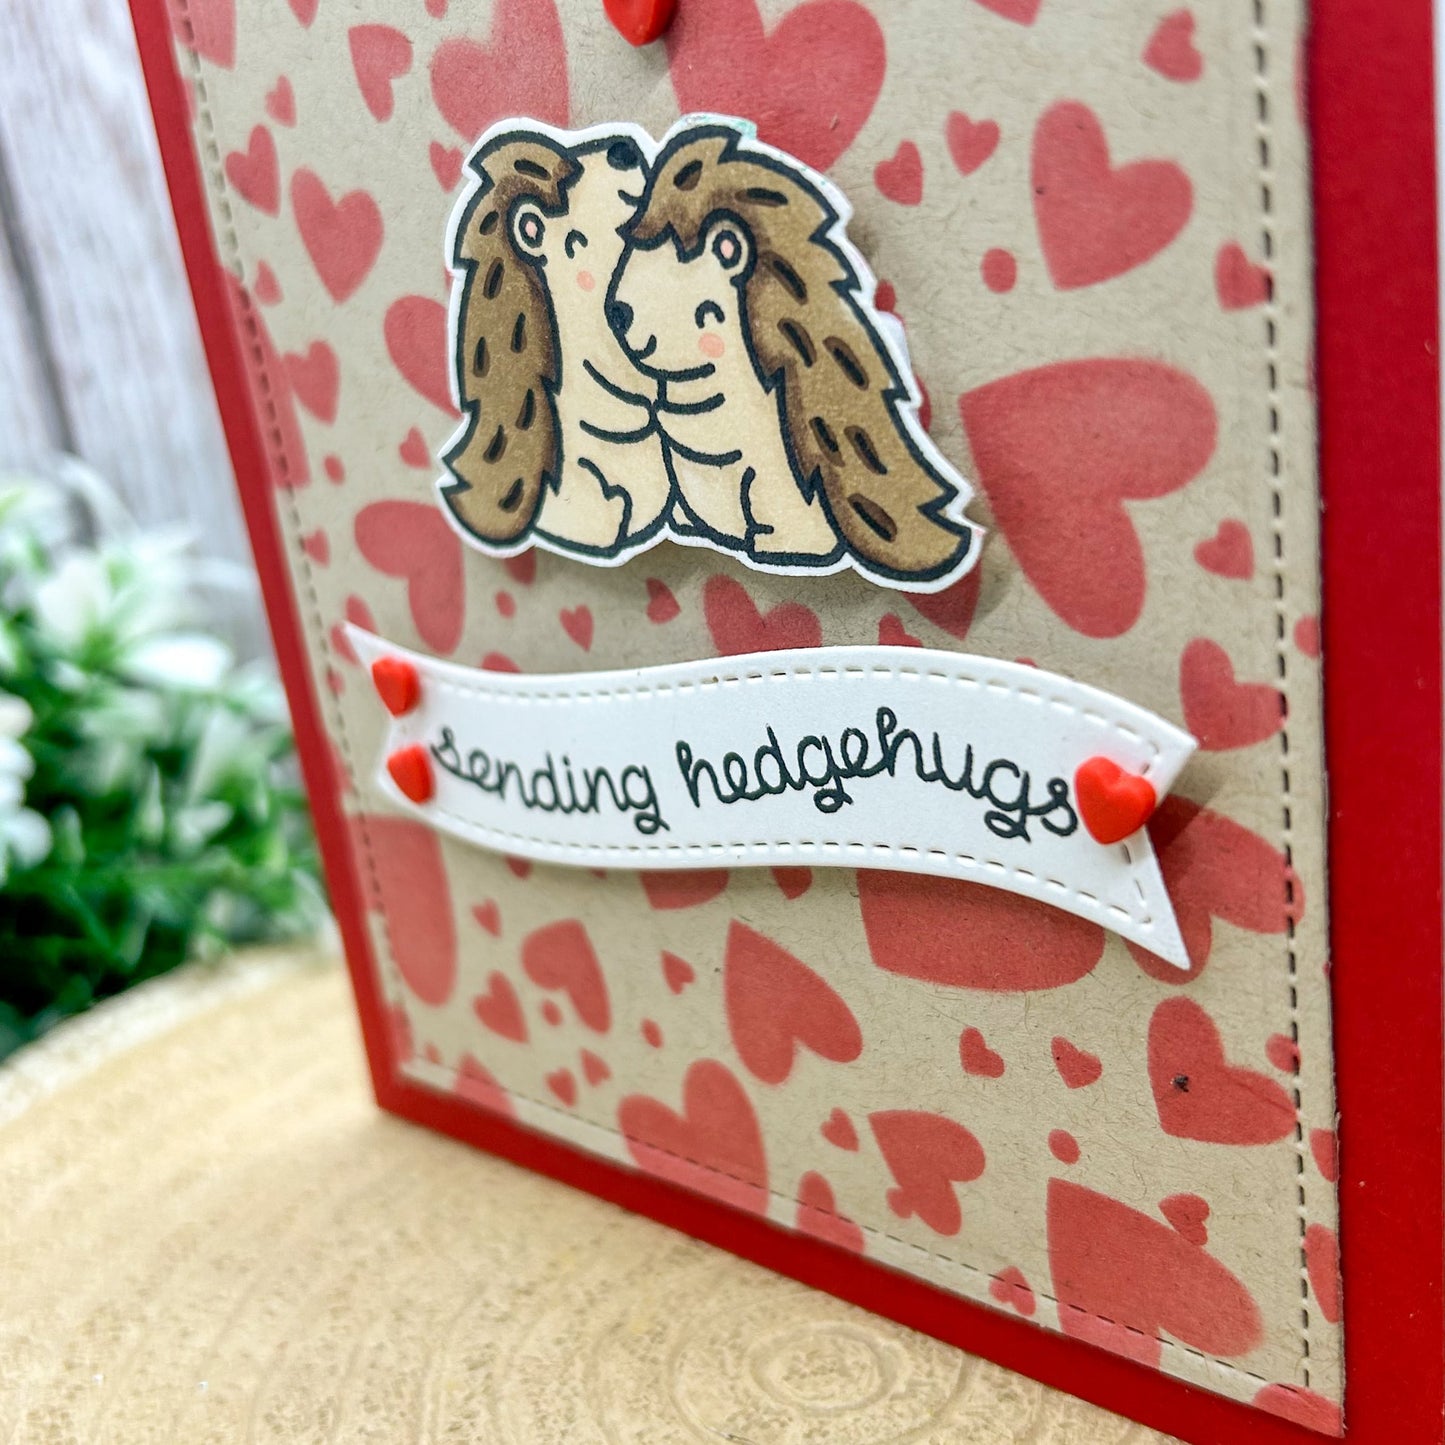 Sending Hedgehugs Handmade Valentine's Day Card